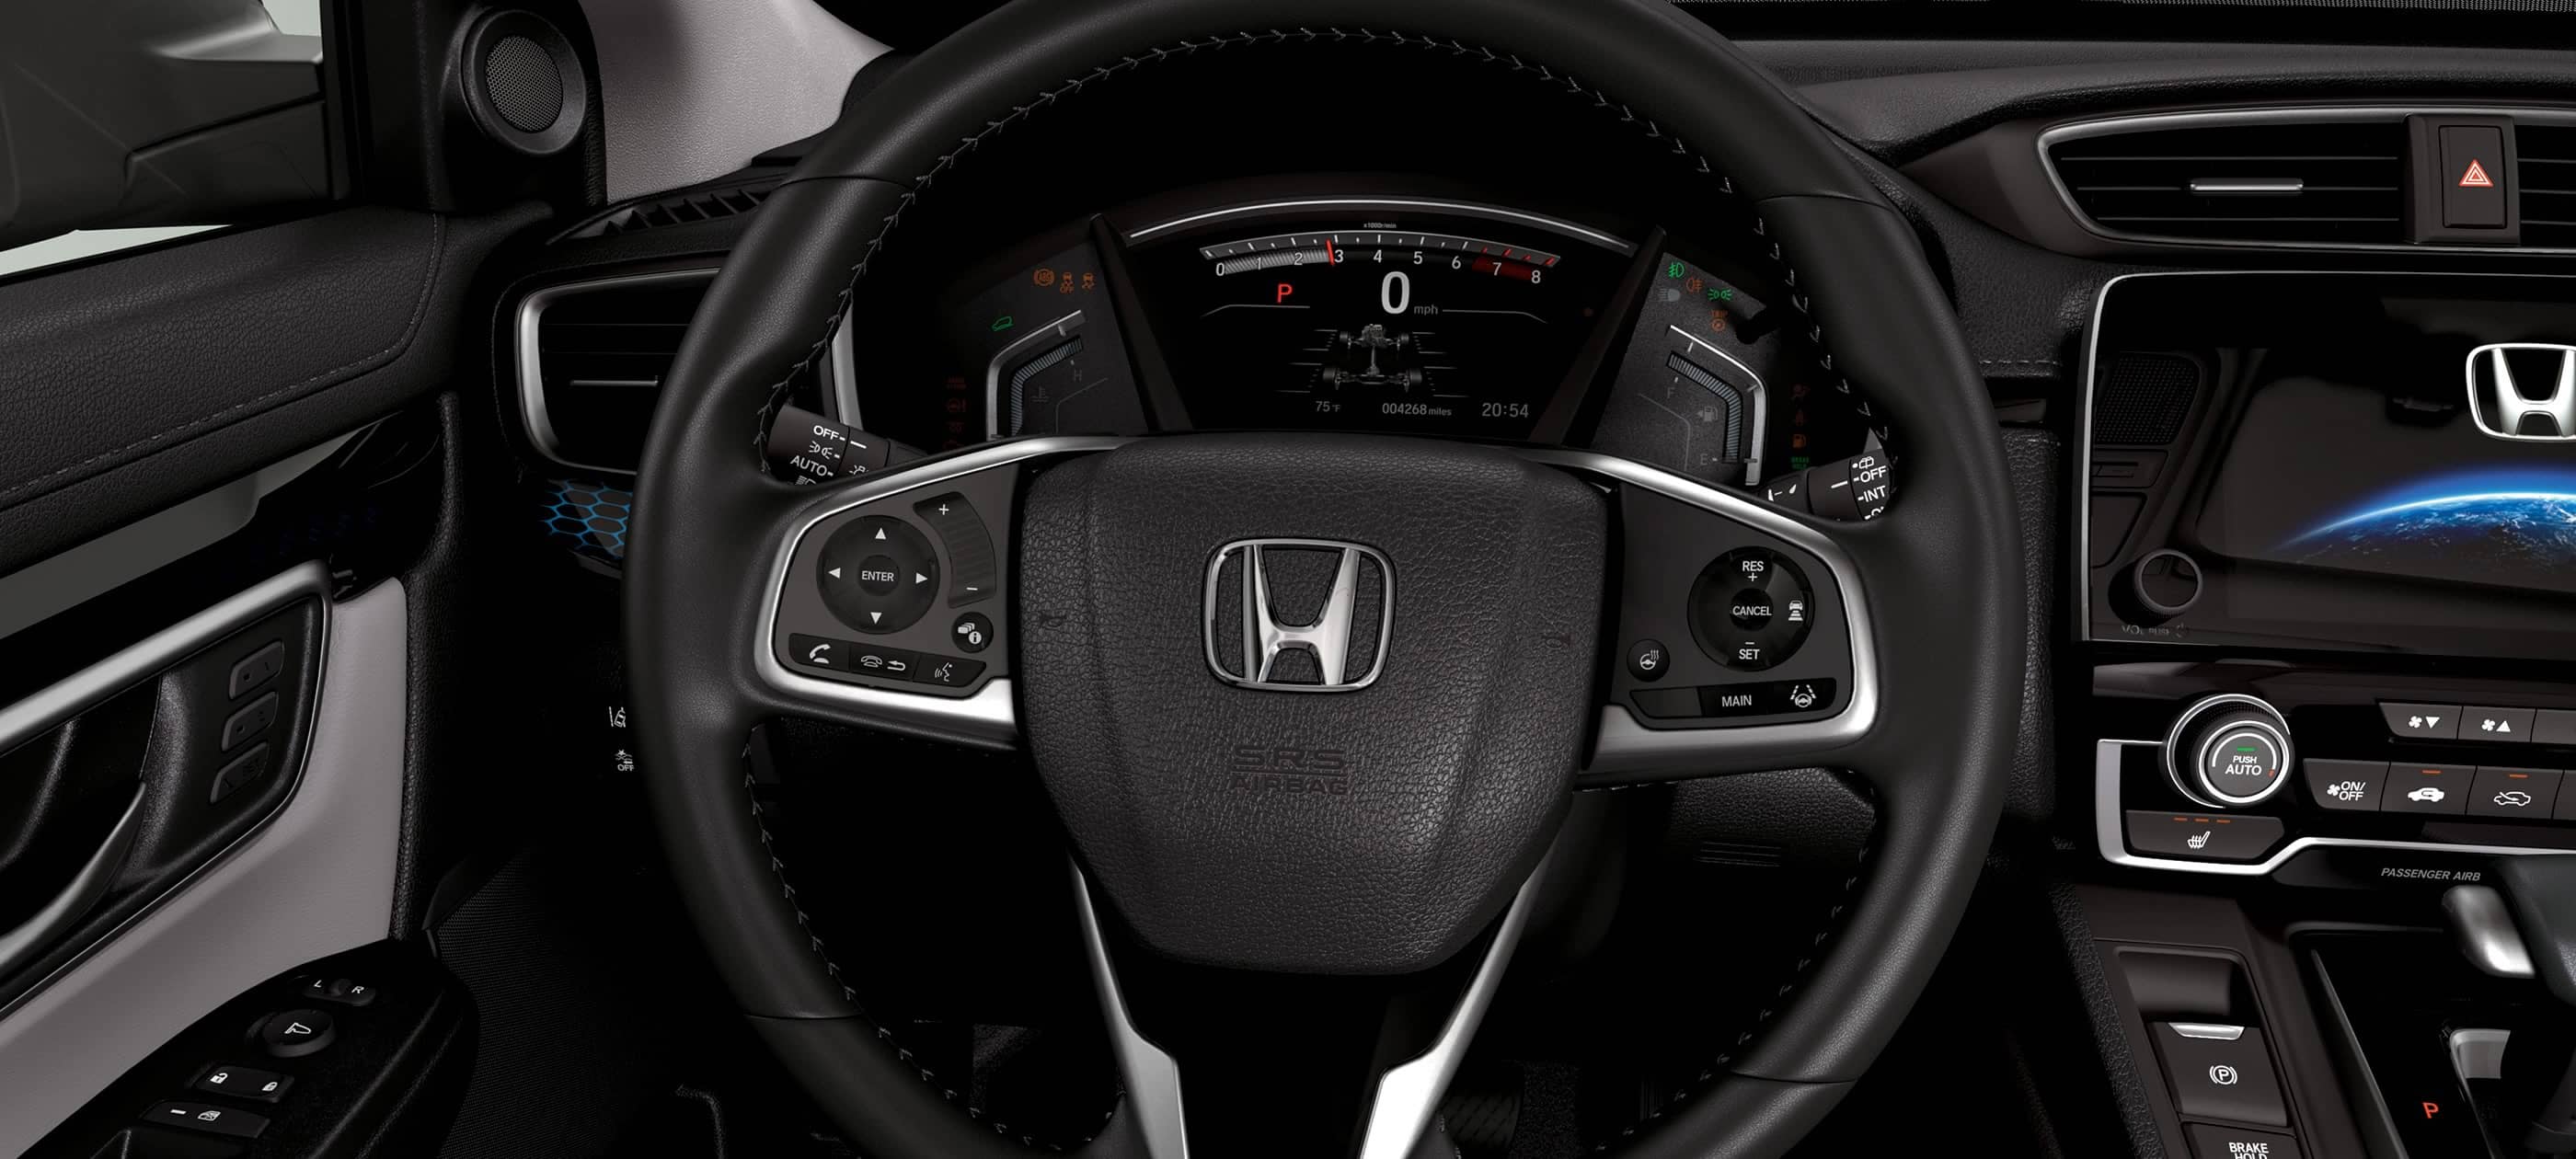 Honda CR-V Heated Steering Wheel Denver